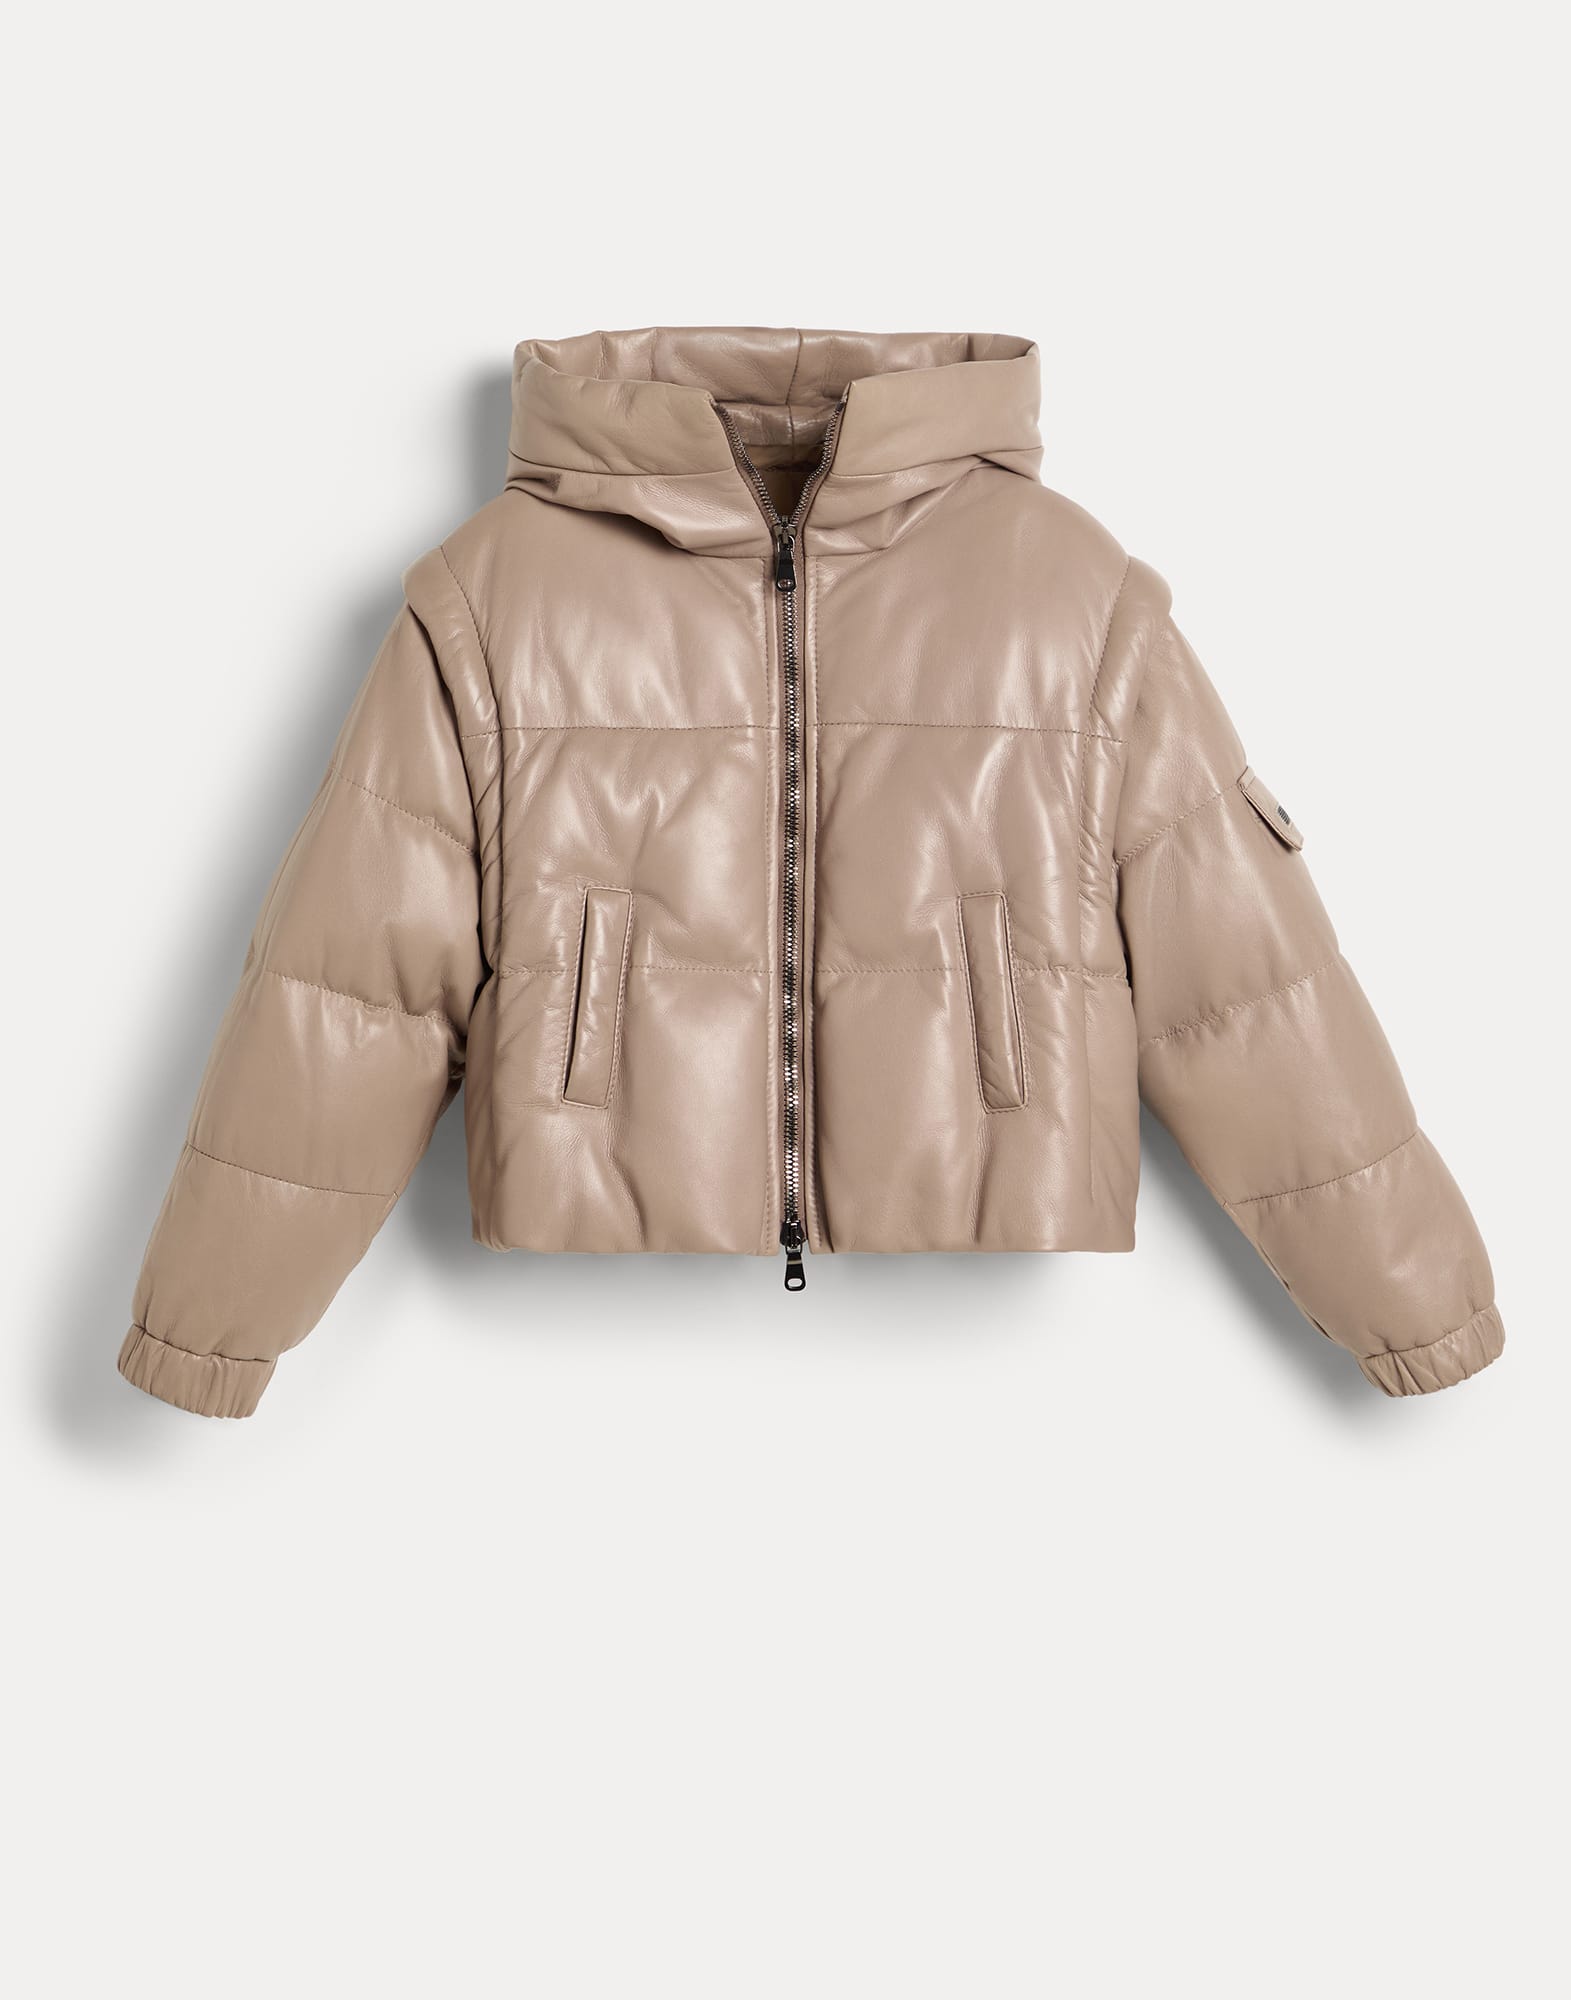 Nappa leather down jacket